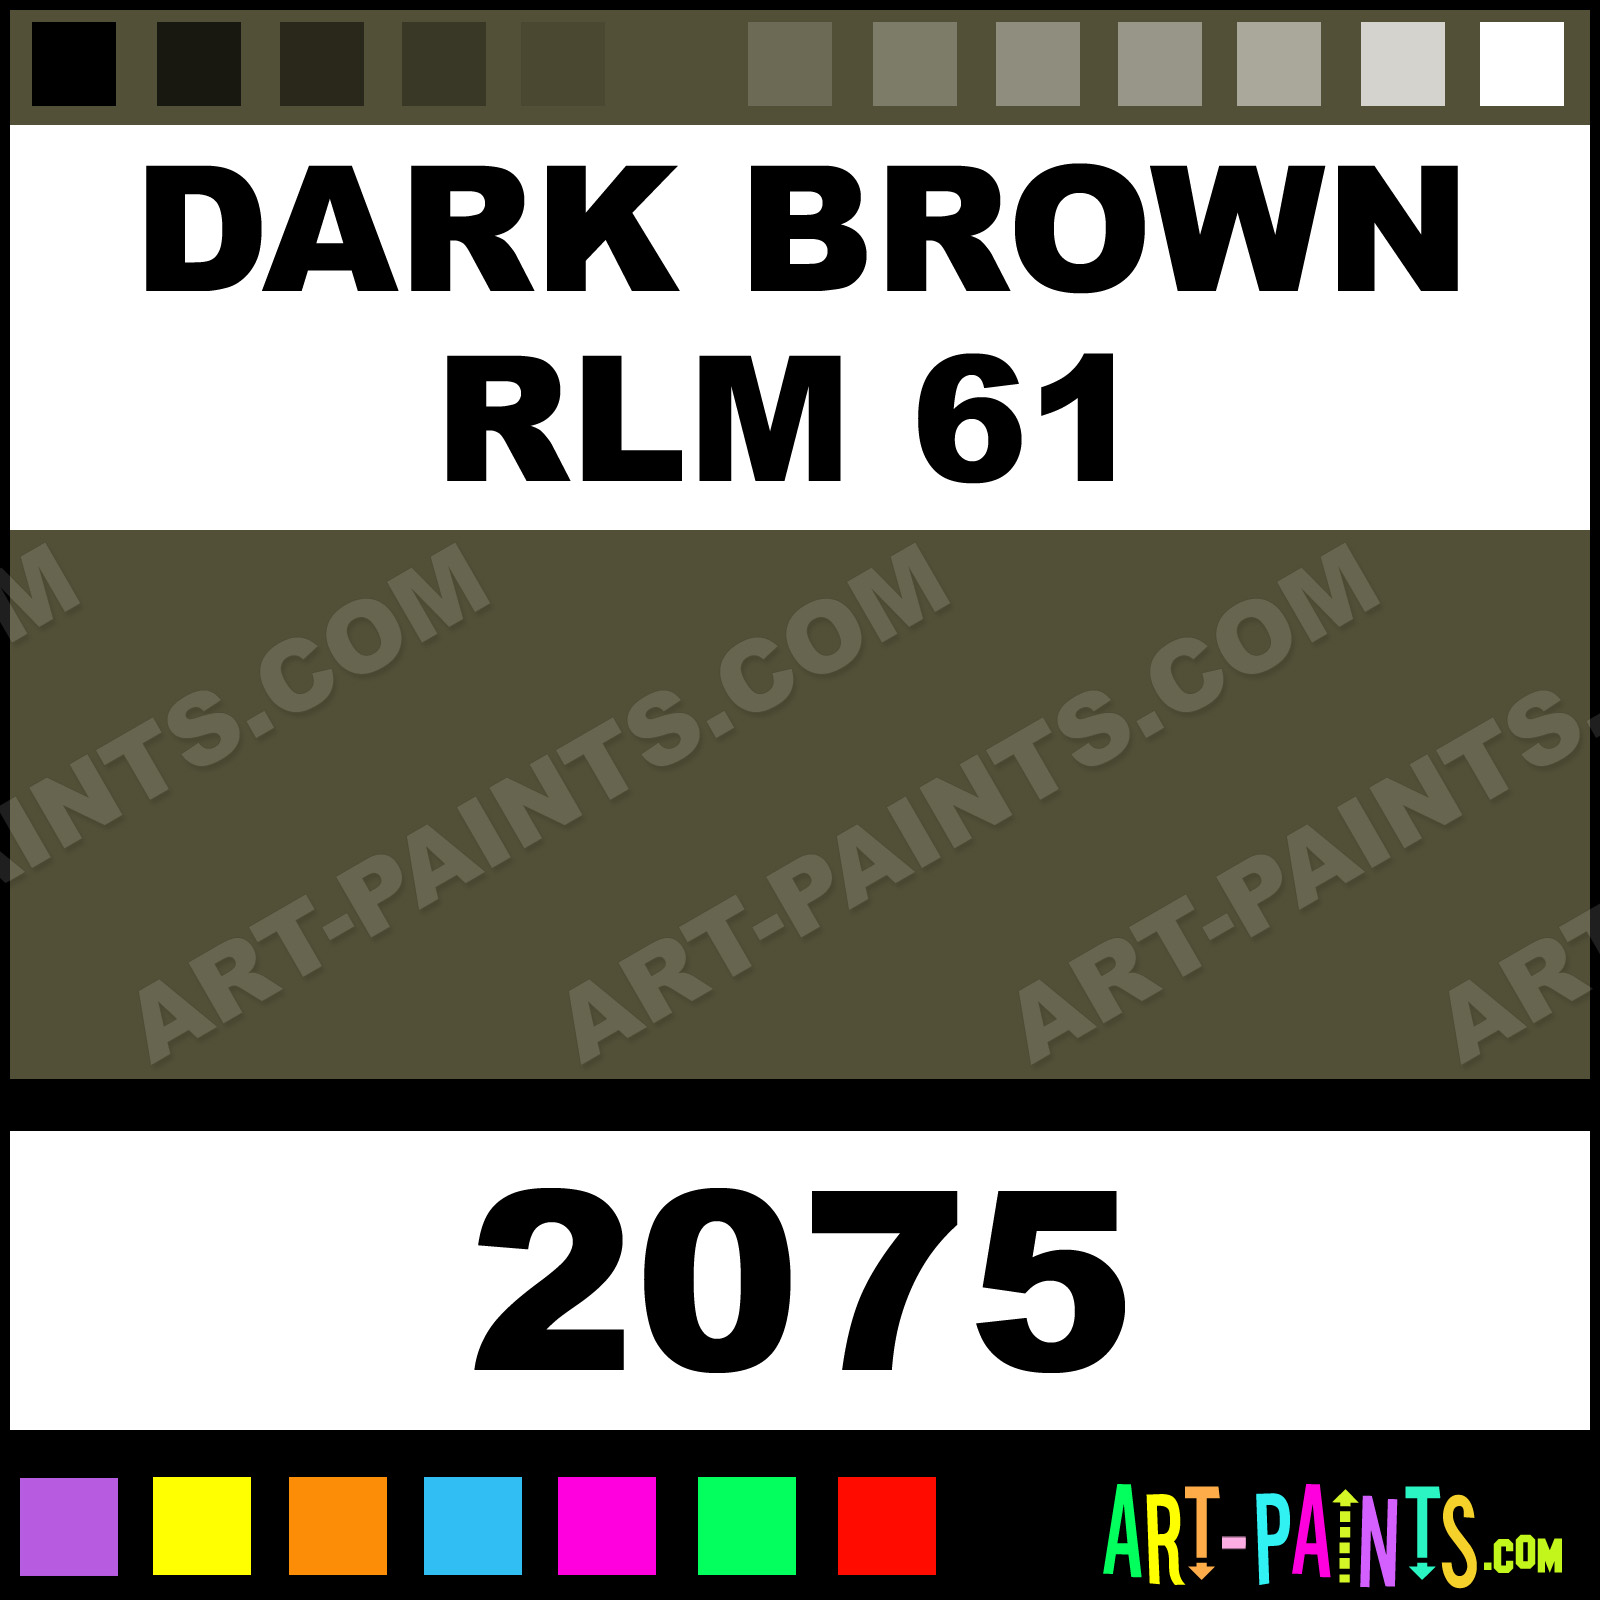 Dark-Brown-RLM-61-xlg.jpg